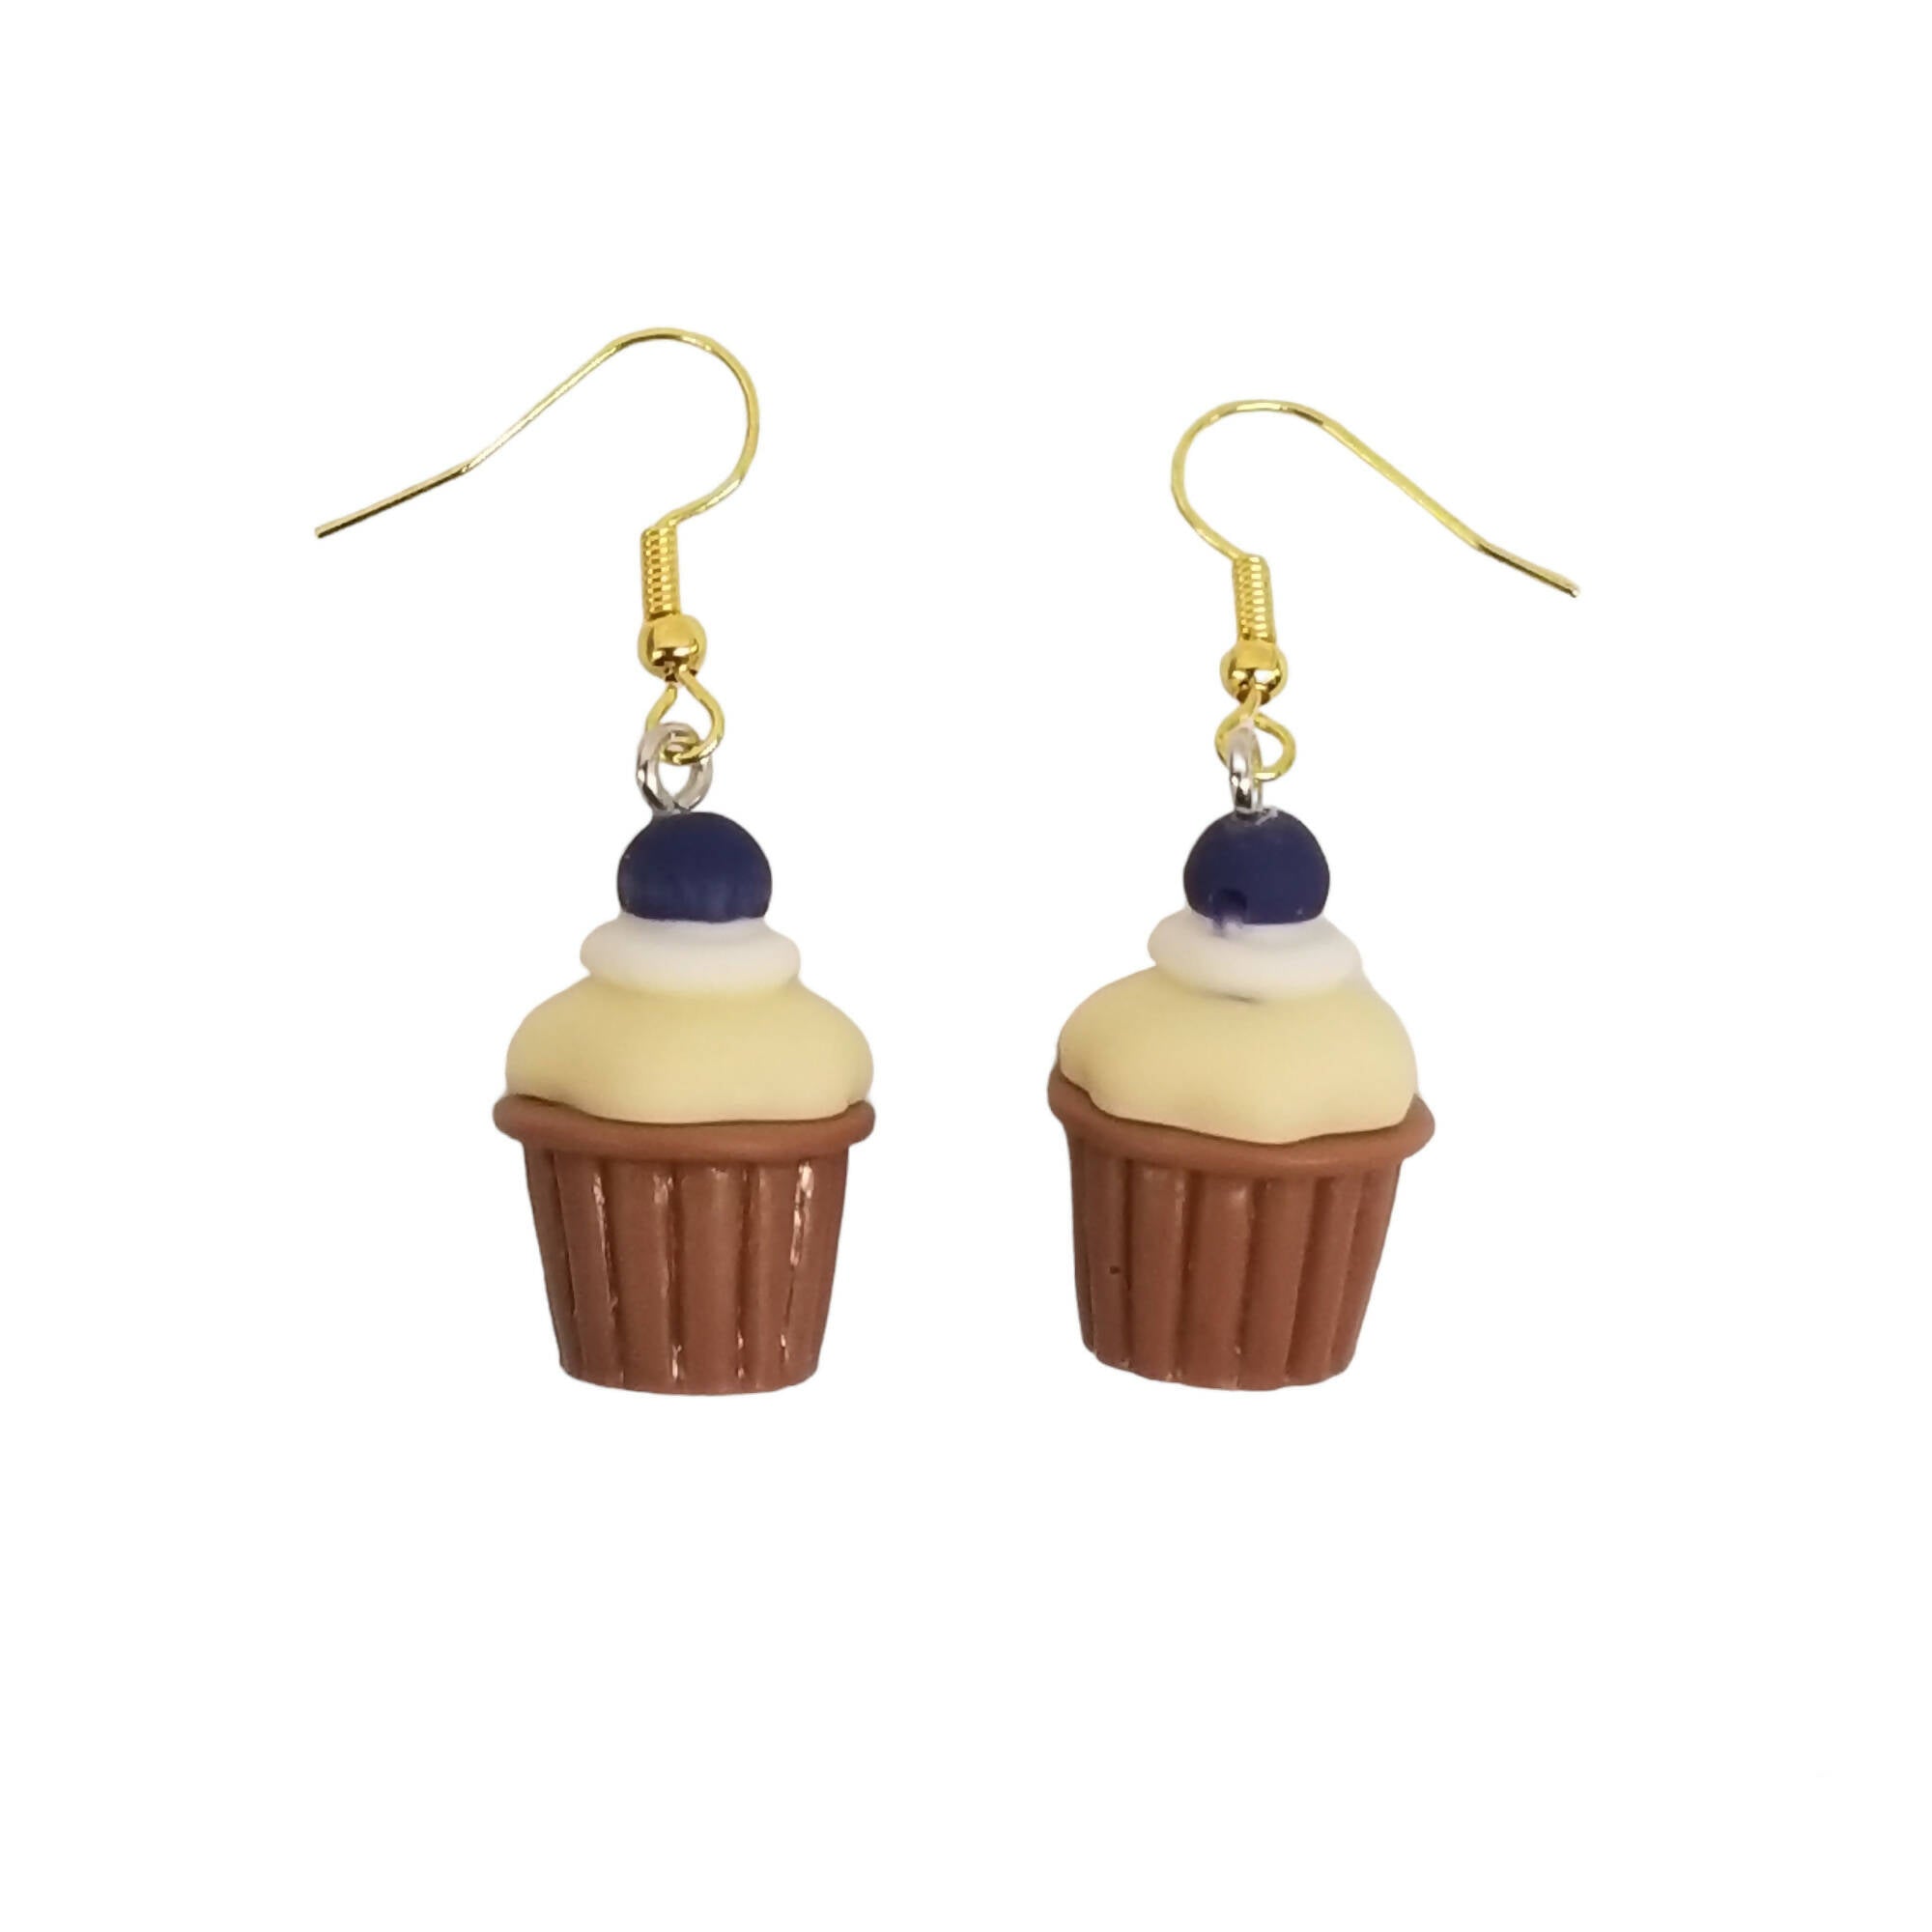 Blueberry Cupcake earrings